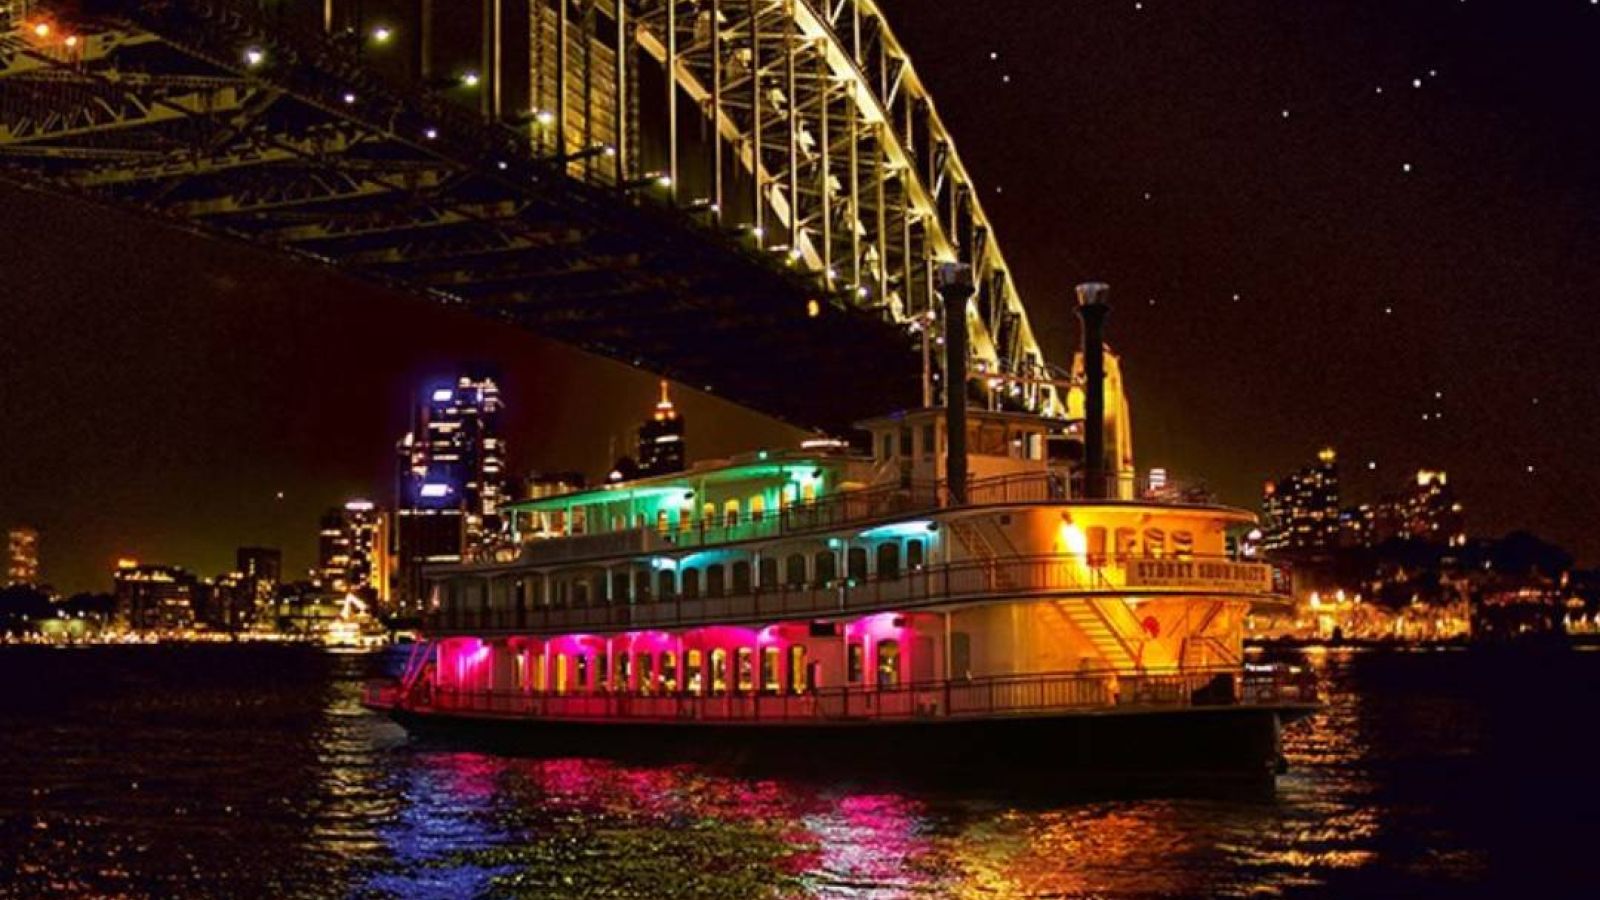 Sydney Showboat - Corporate or wedding boat hire